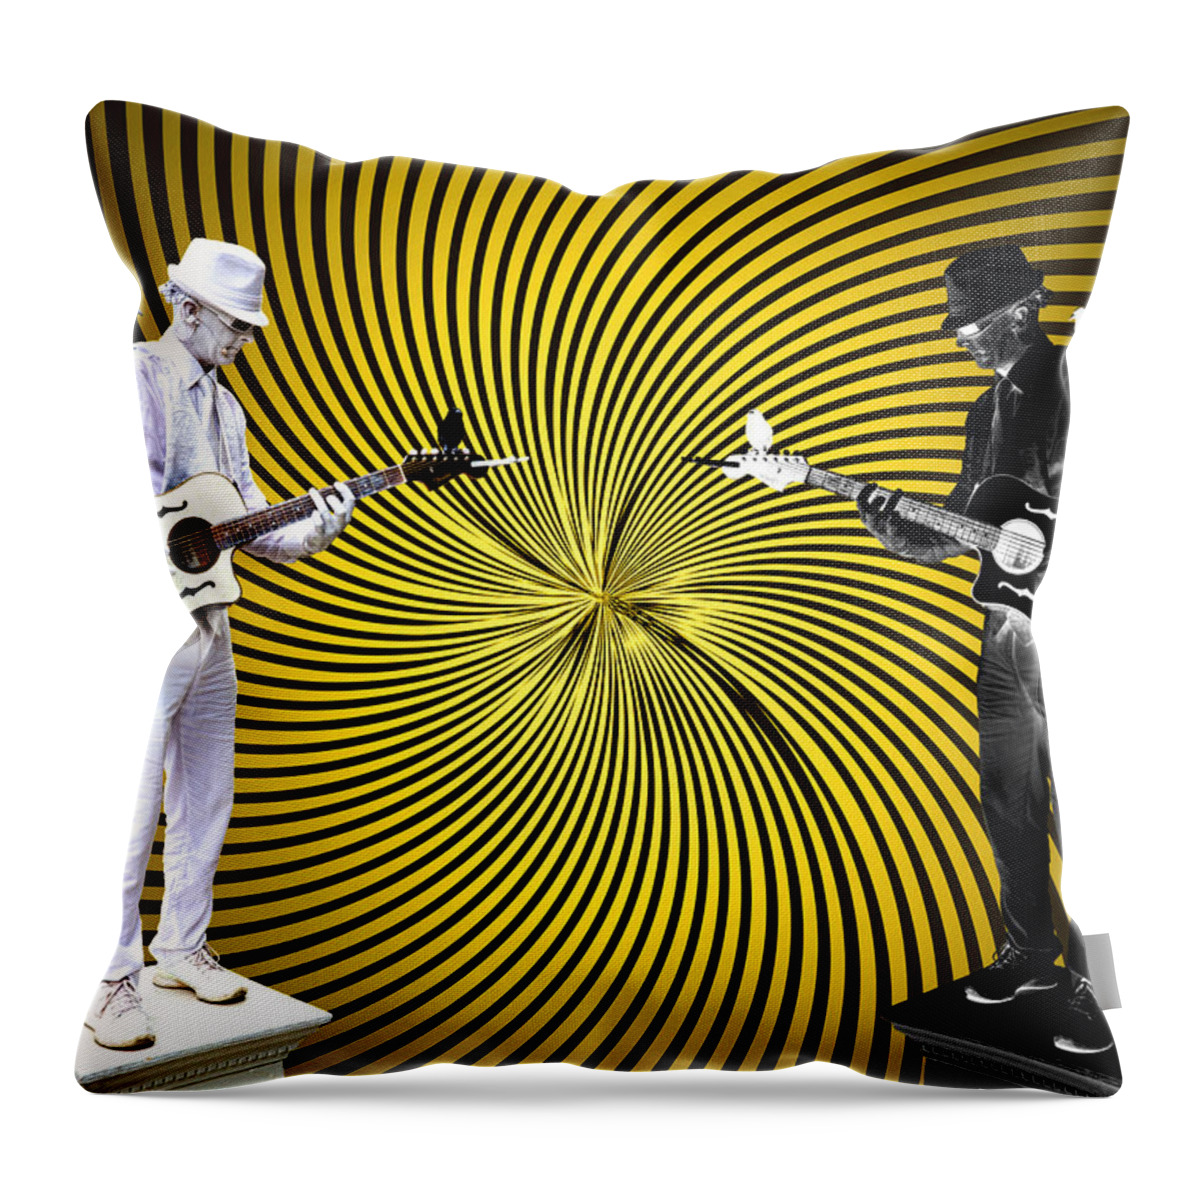 Mimes Throw Pillow featuring the digital art Dueling Mimes by John Haldane